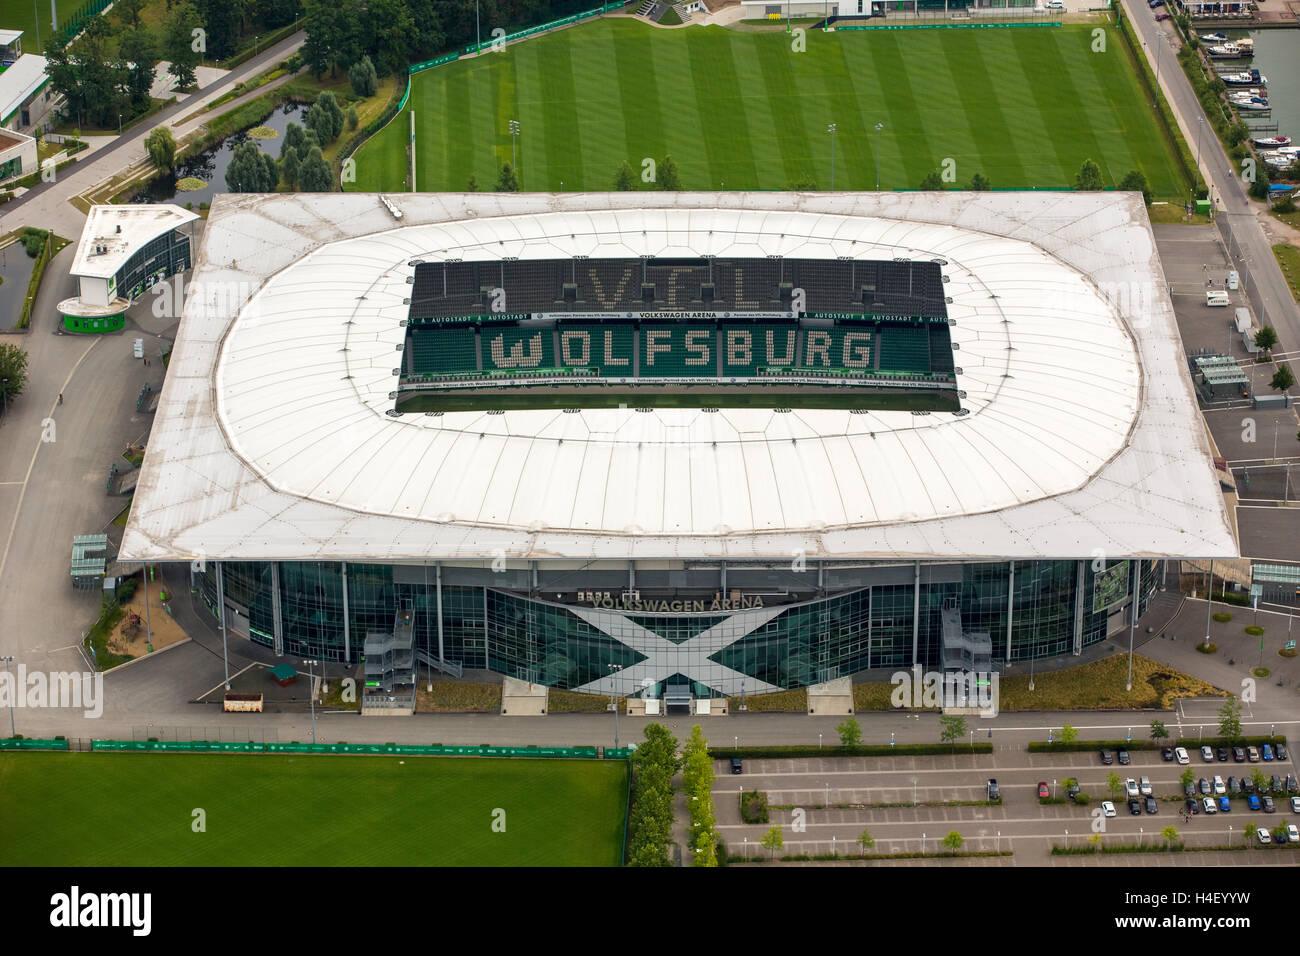 Vue aérienne, Volkswagen Arena de Wolfsburg, Bundesliga Football Club, l'usine Volkswagen de Wolfsburg, Basse-Saxe, Allemagne Banque D'Images